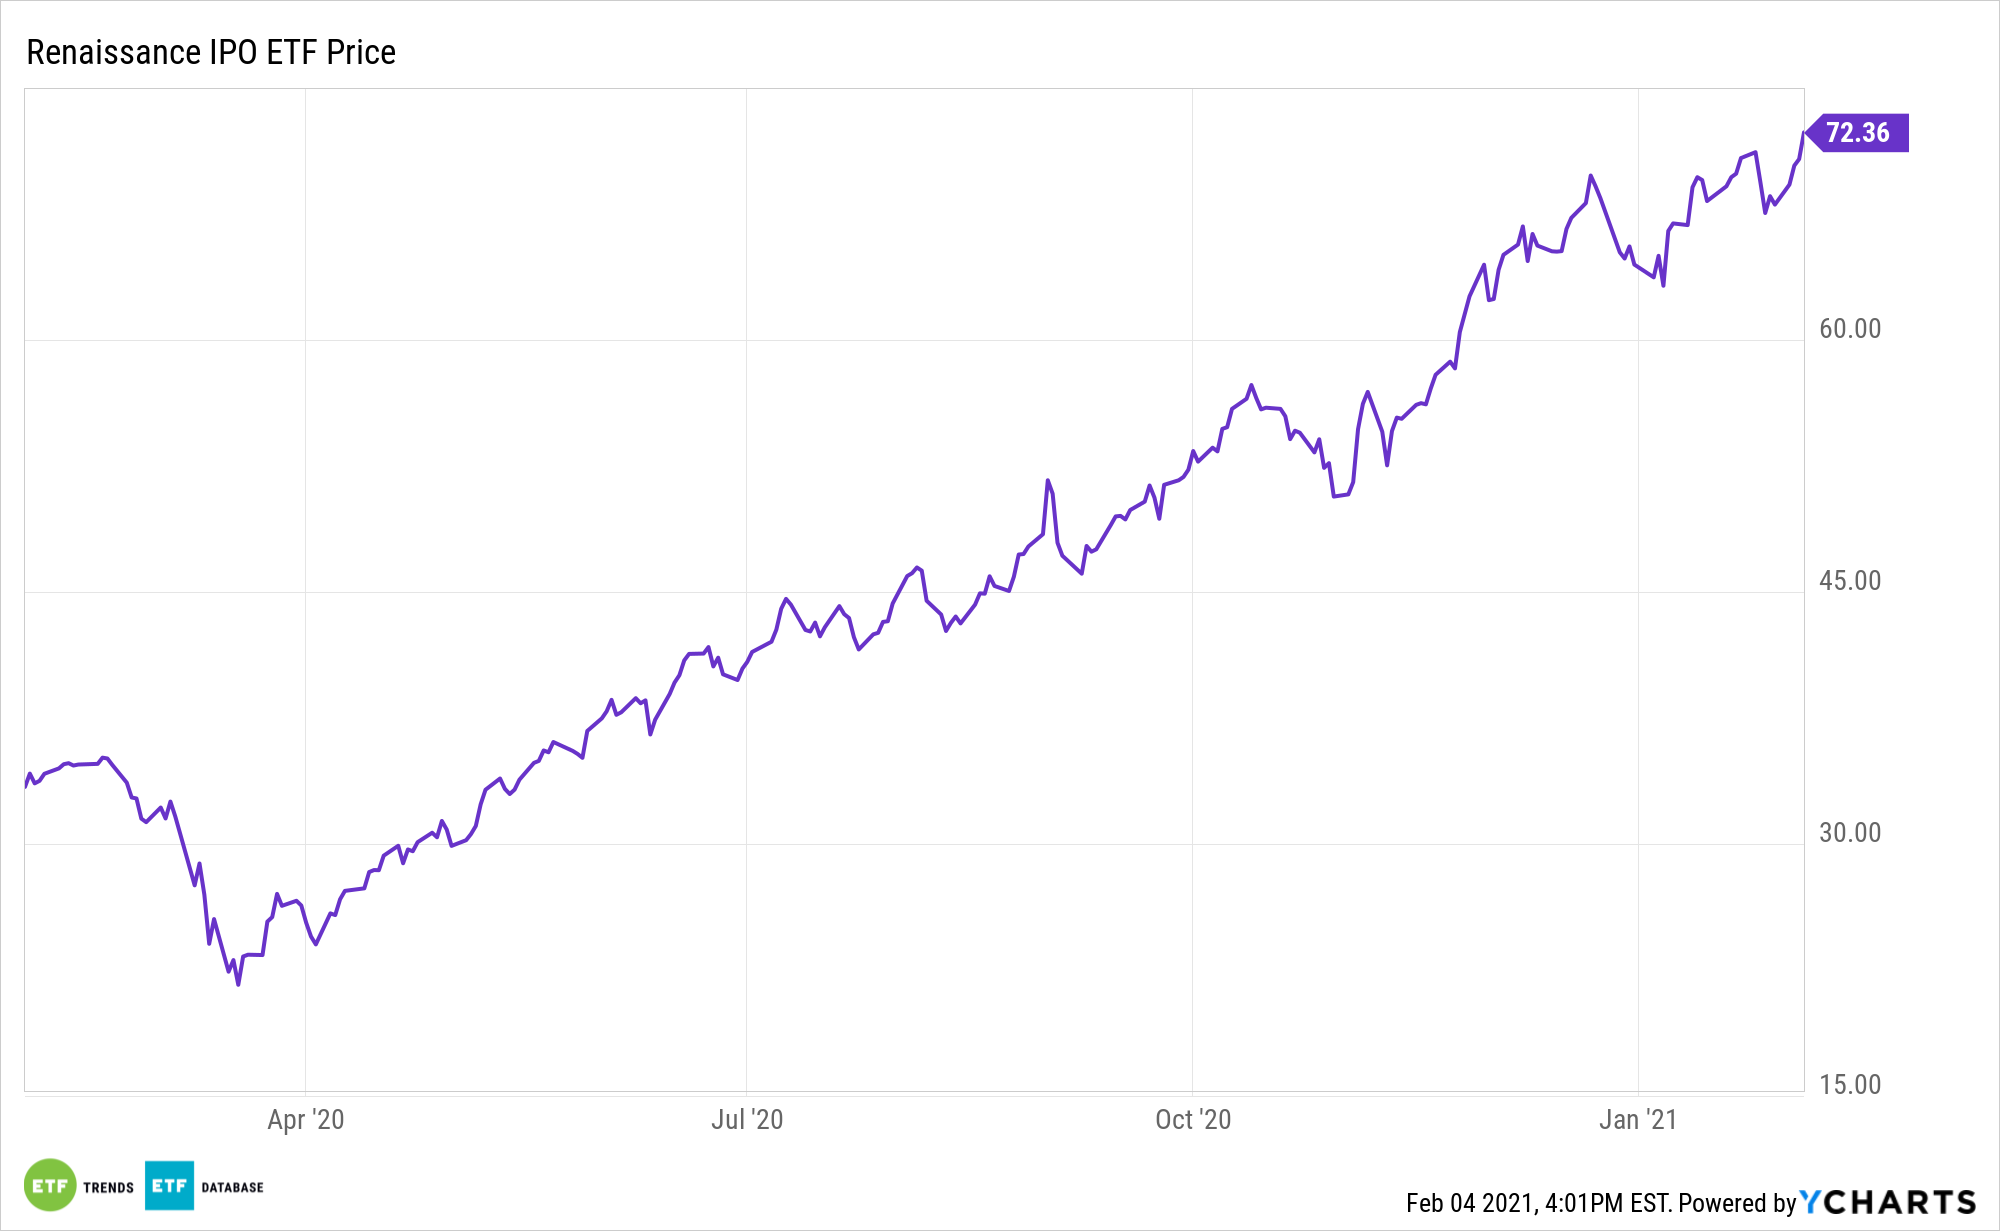 IPO 1 Year Performance